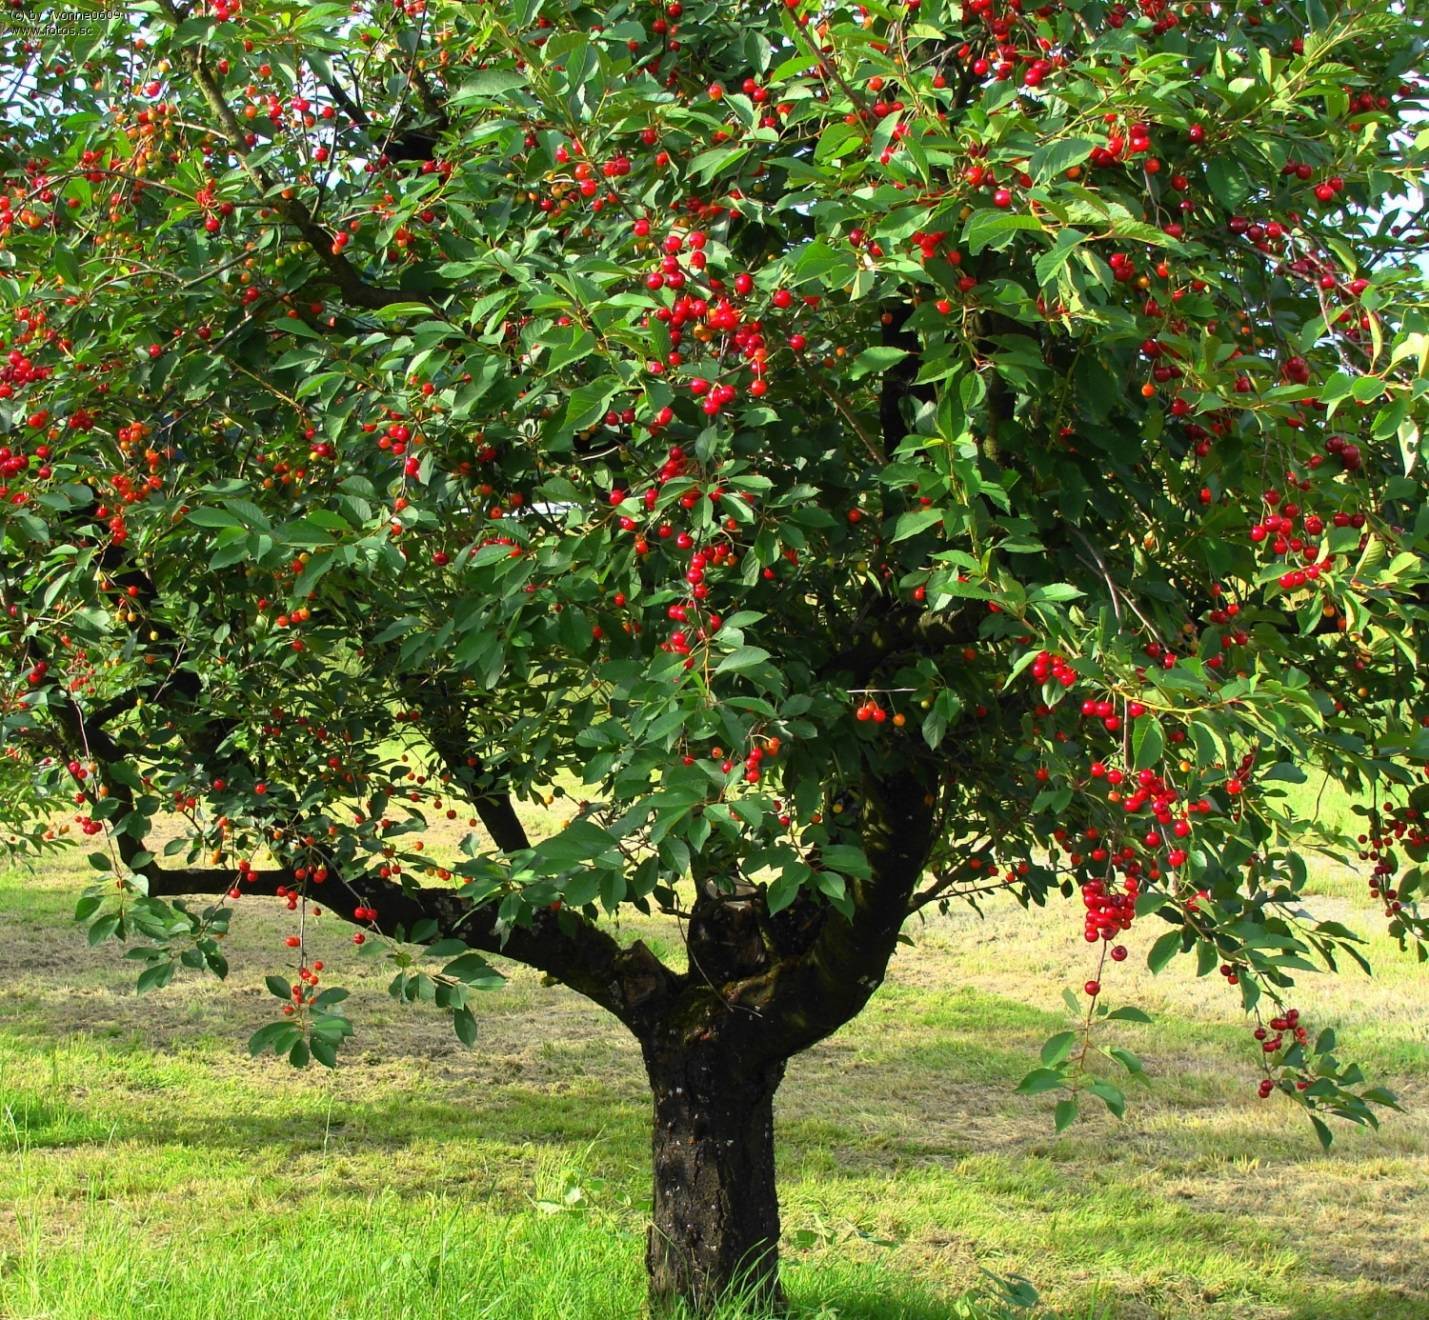 Ботаническое описание и характеристика вишни